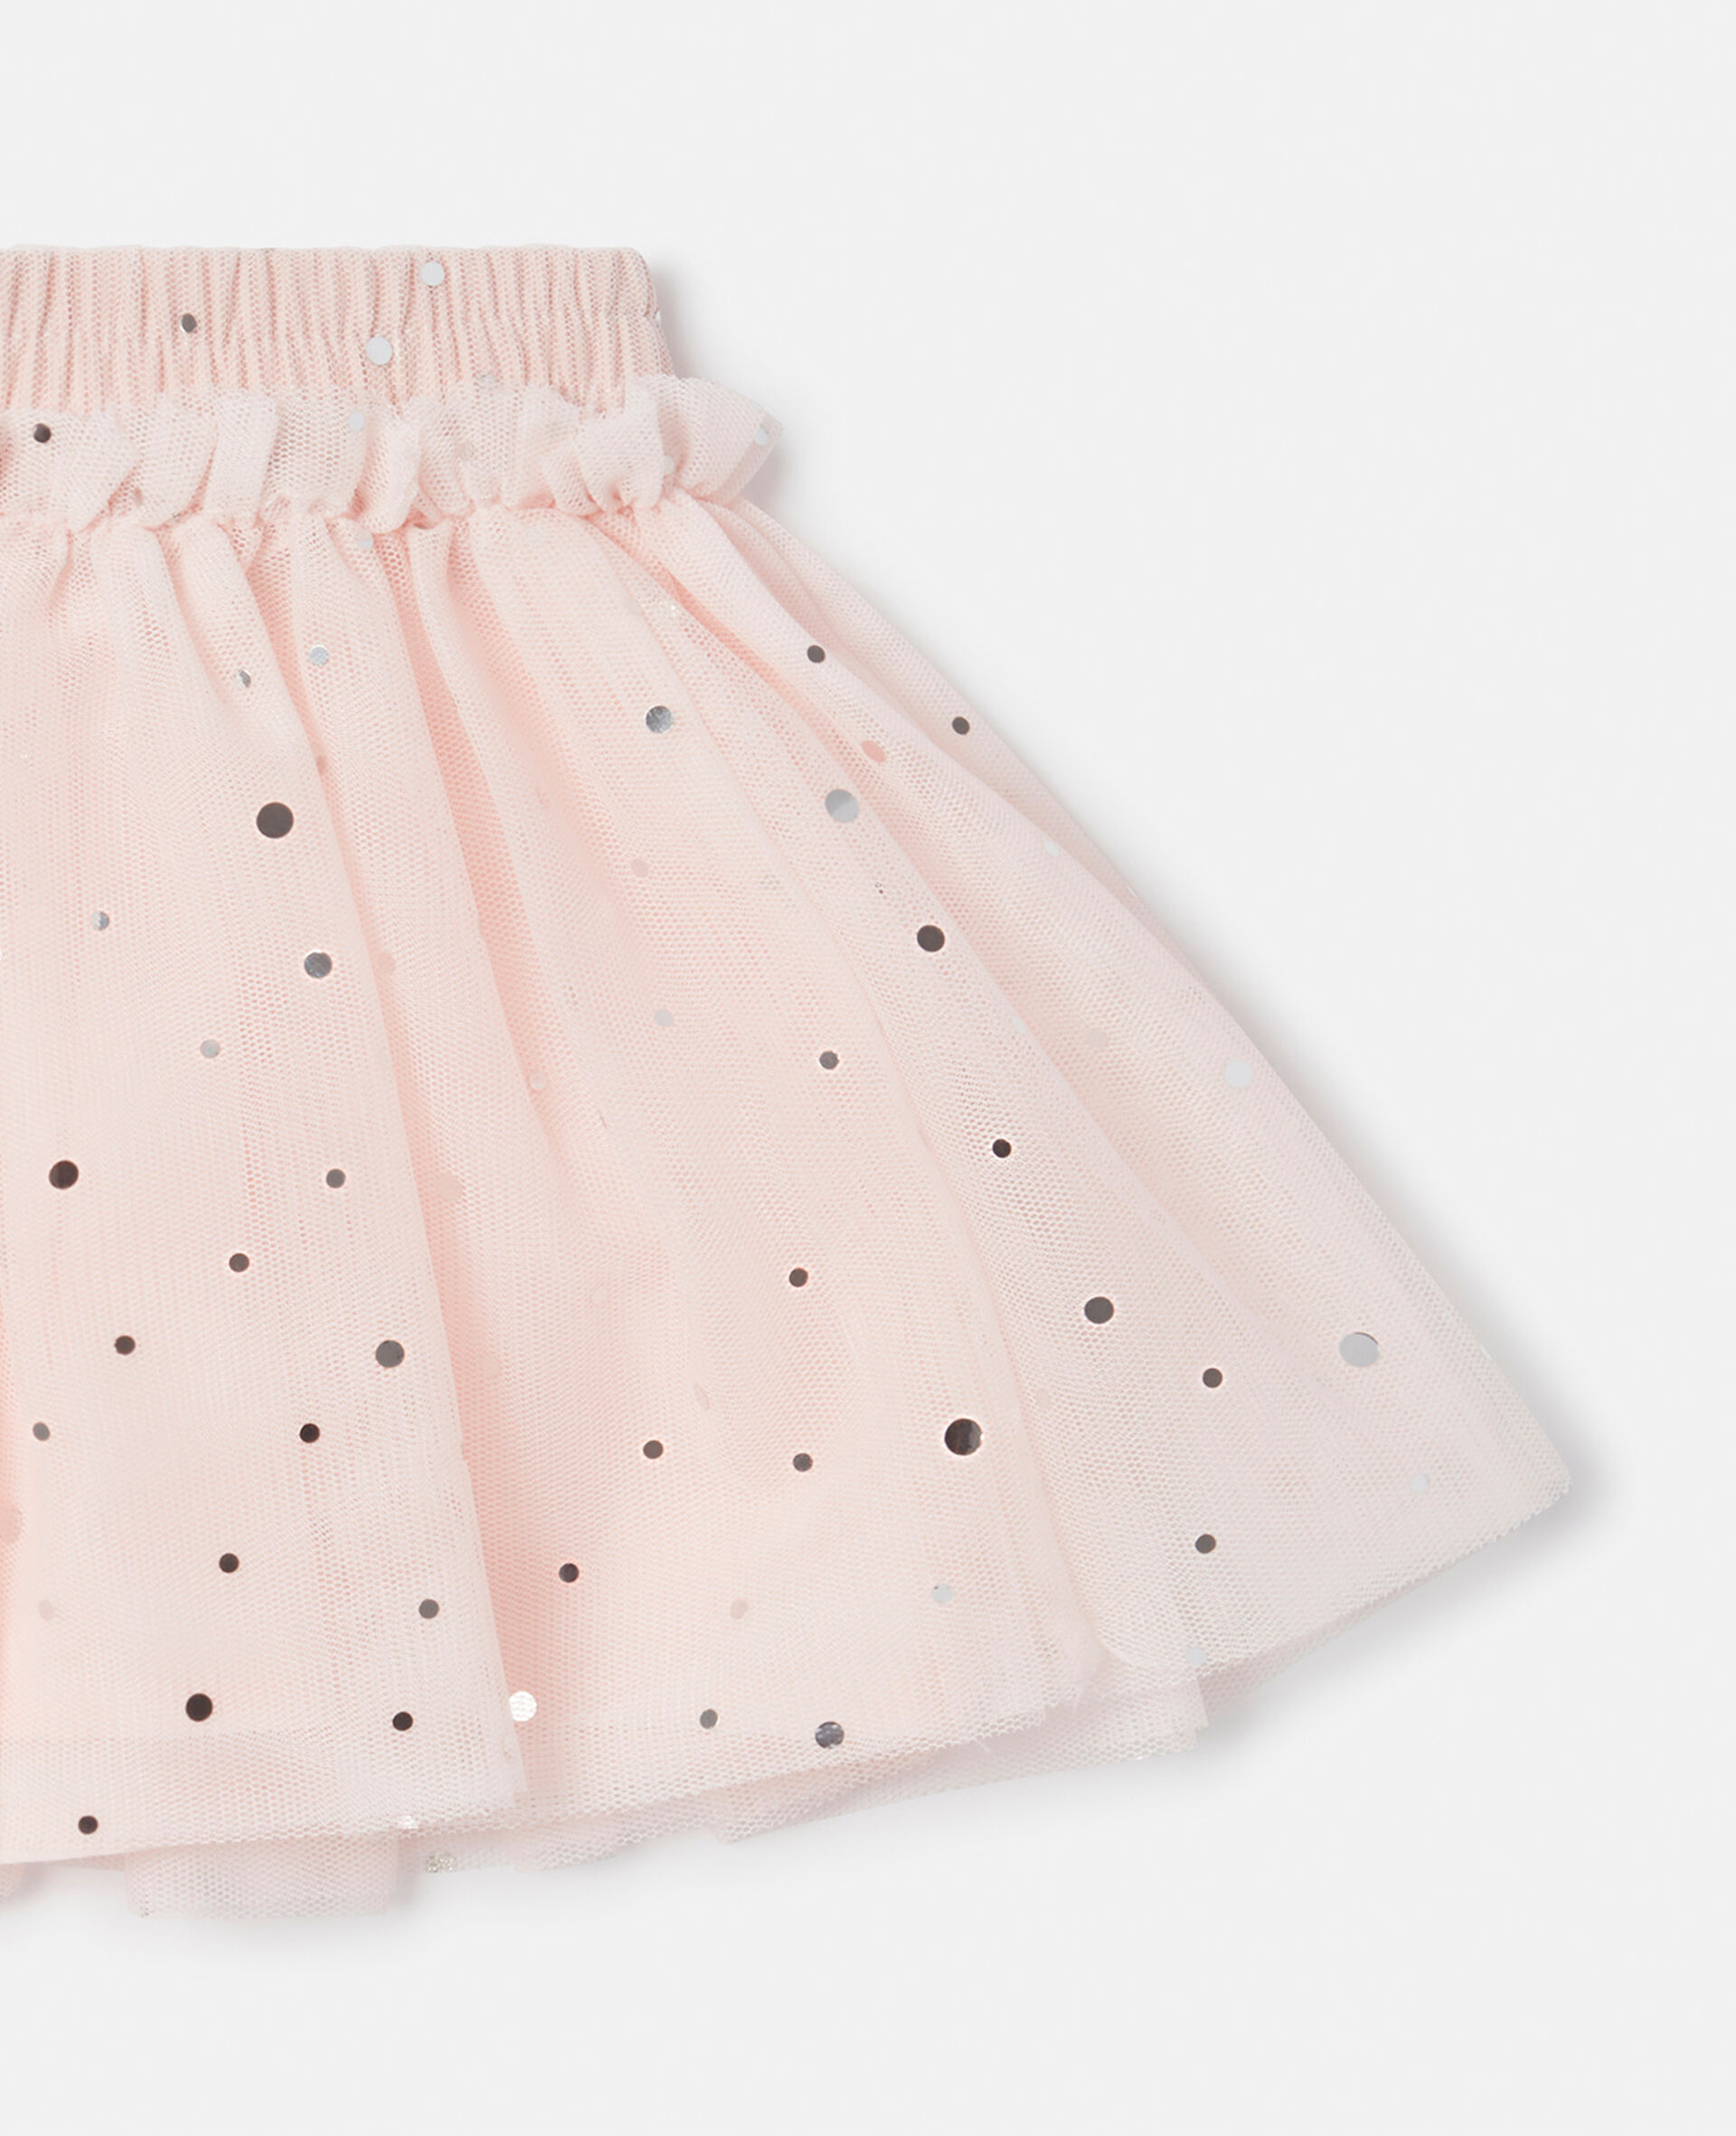 Crystal Tulle Skirt-Pink-large image number 3